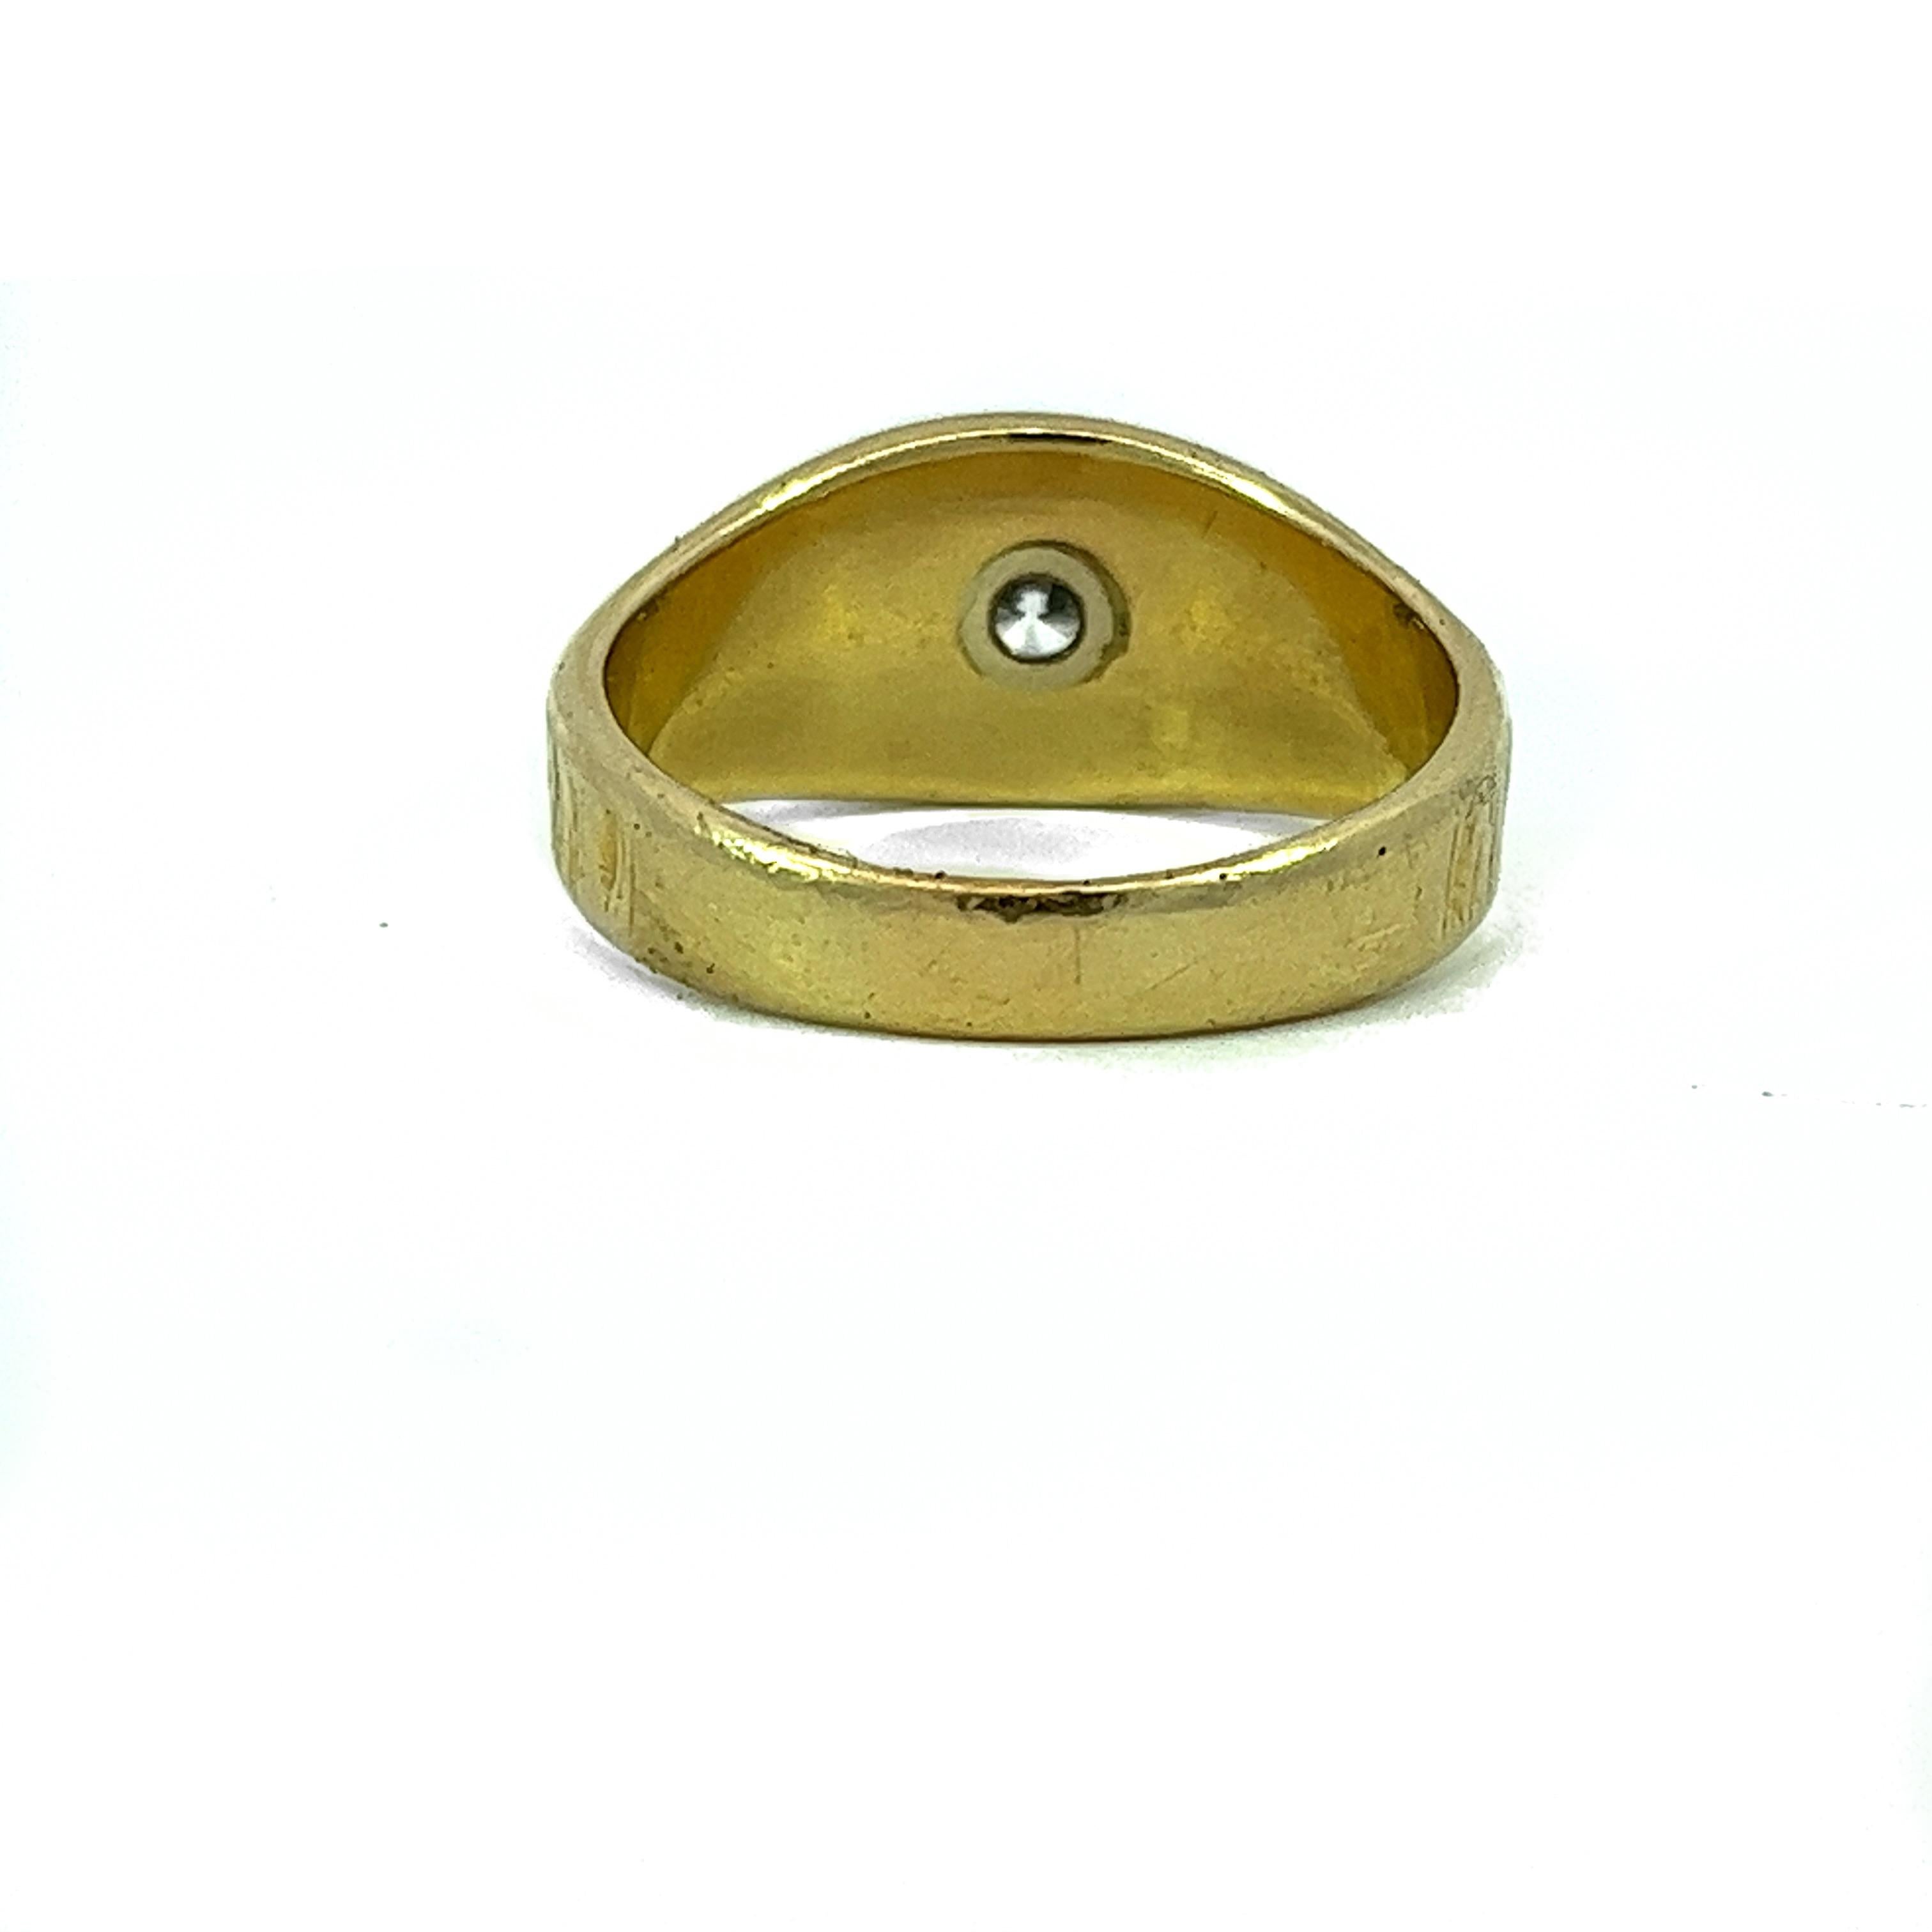 Brilliant Cut Vintage Artisan Men's Gold Diamond Ring: .45 Carat Diamond, Sizable 10.5 For Sale